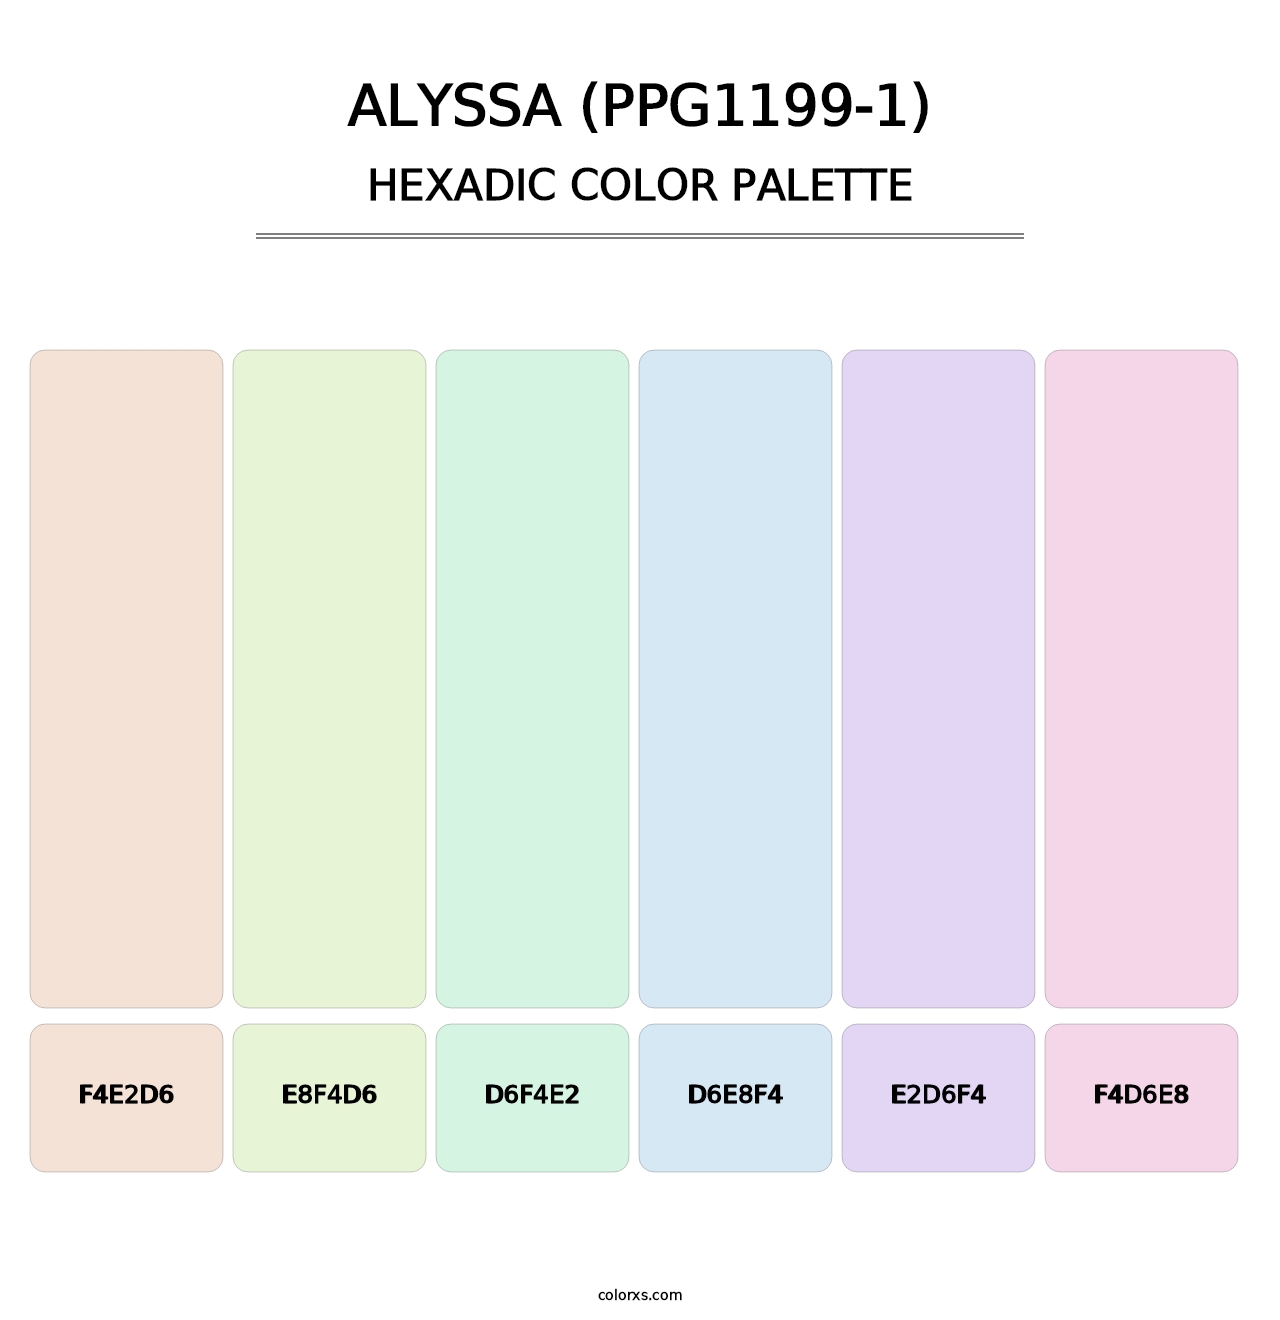 Alyssa (PPG1199-1) - Hexadic Color Palette